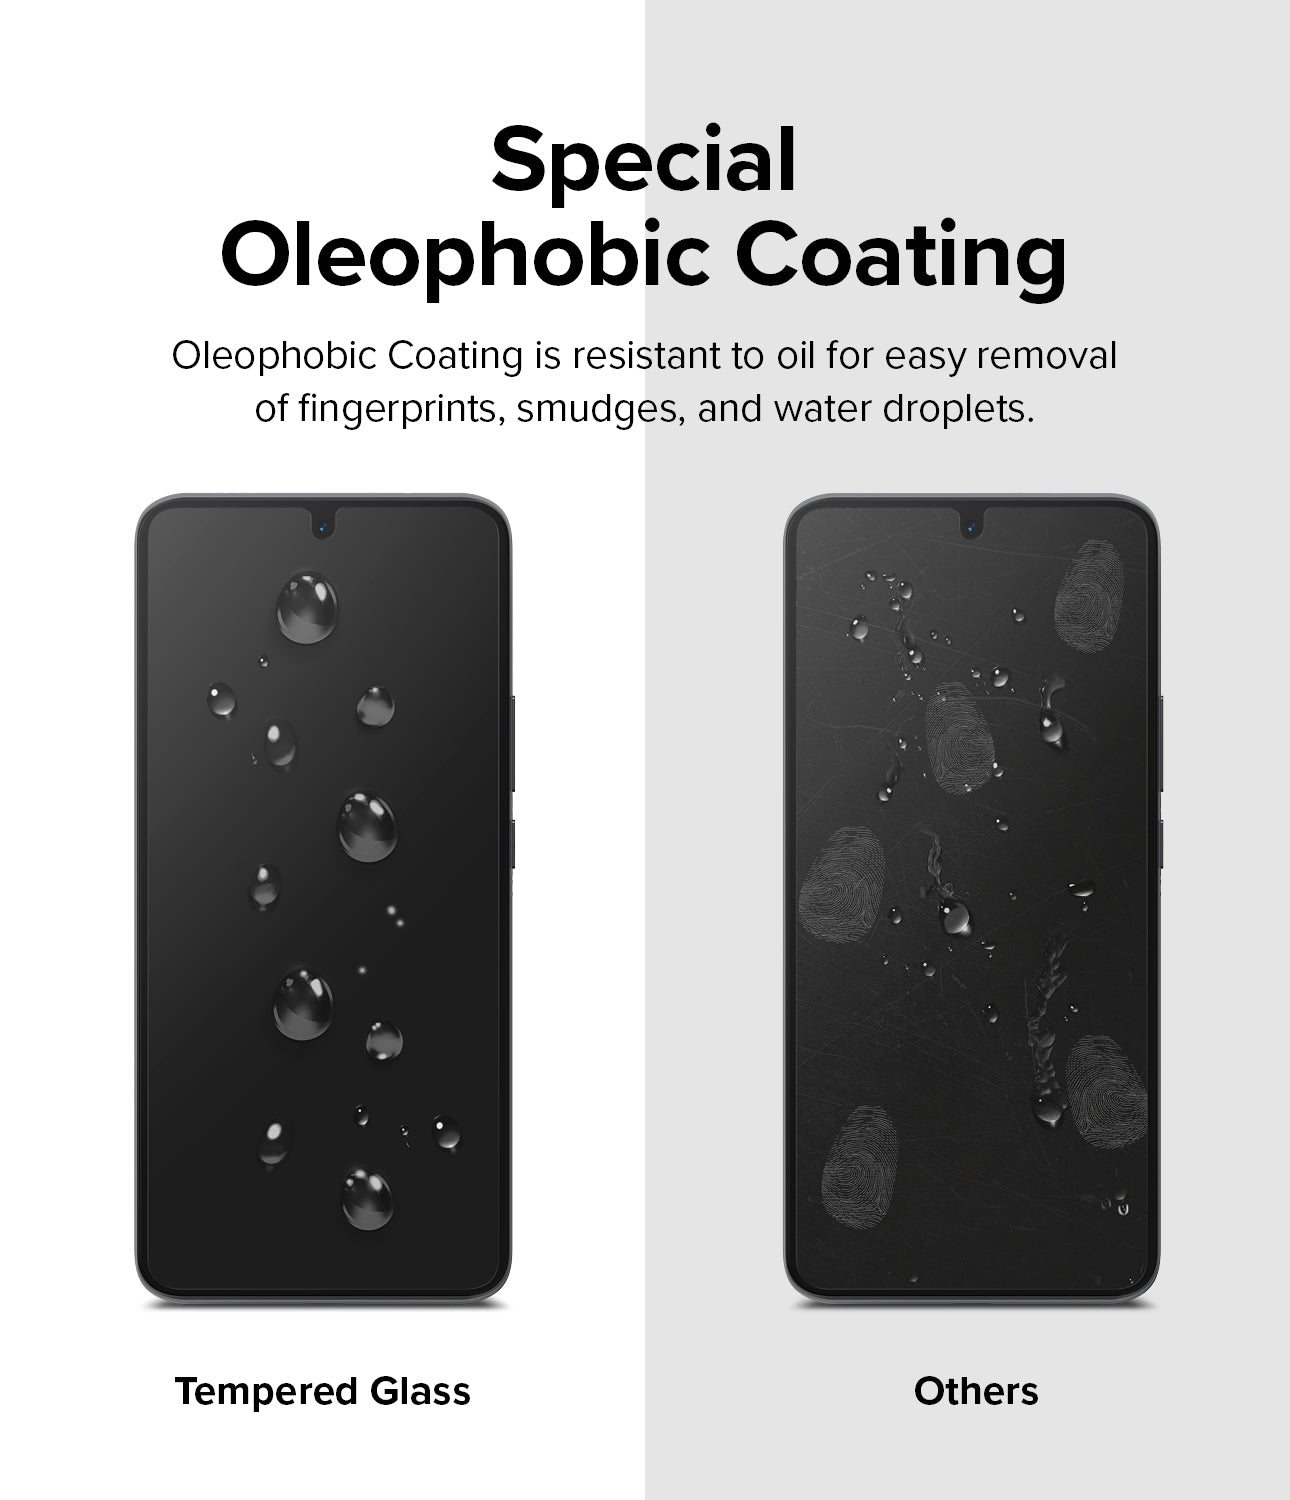 Special Oleophobic Coating - Oleophobic Coating is resistant to oil for easy removal of fingerprints, smudges, and water droplets.